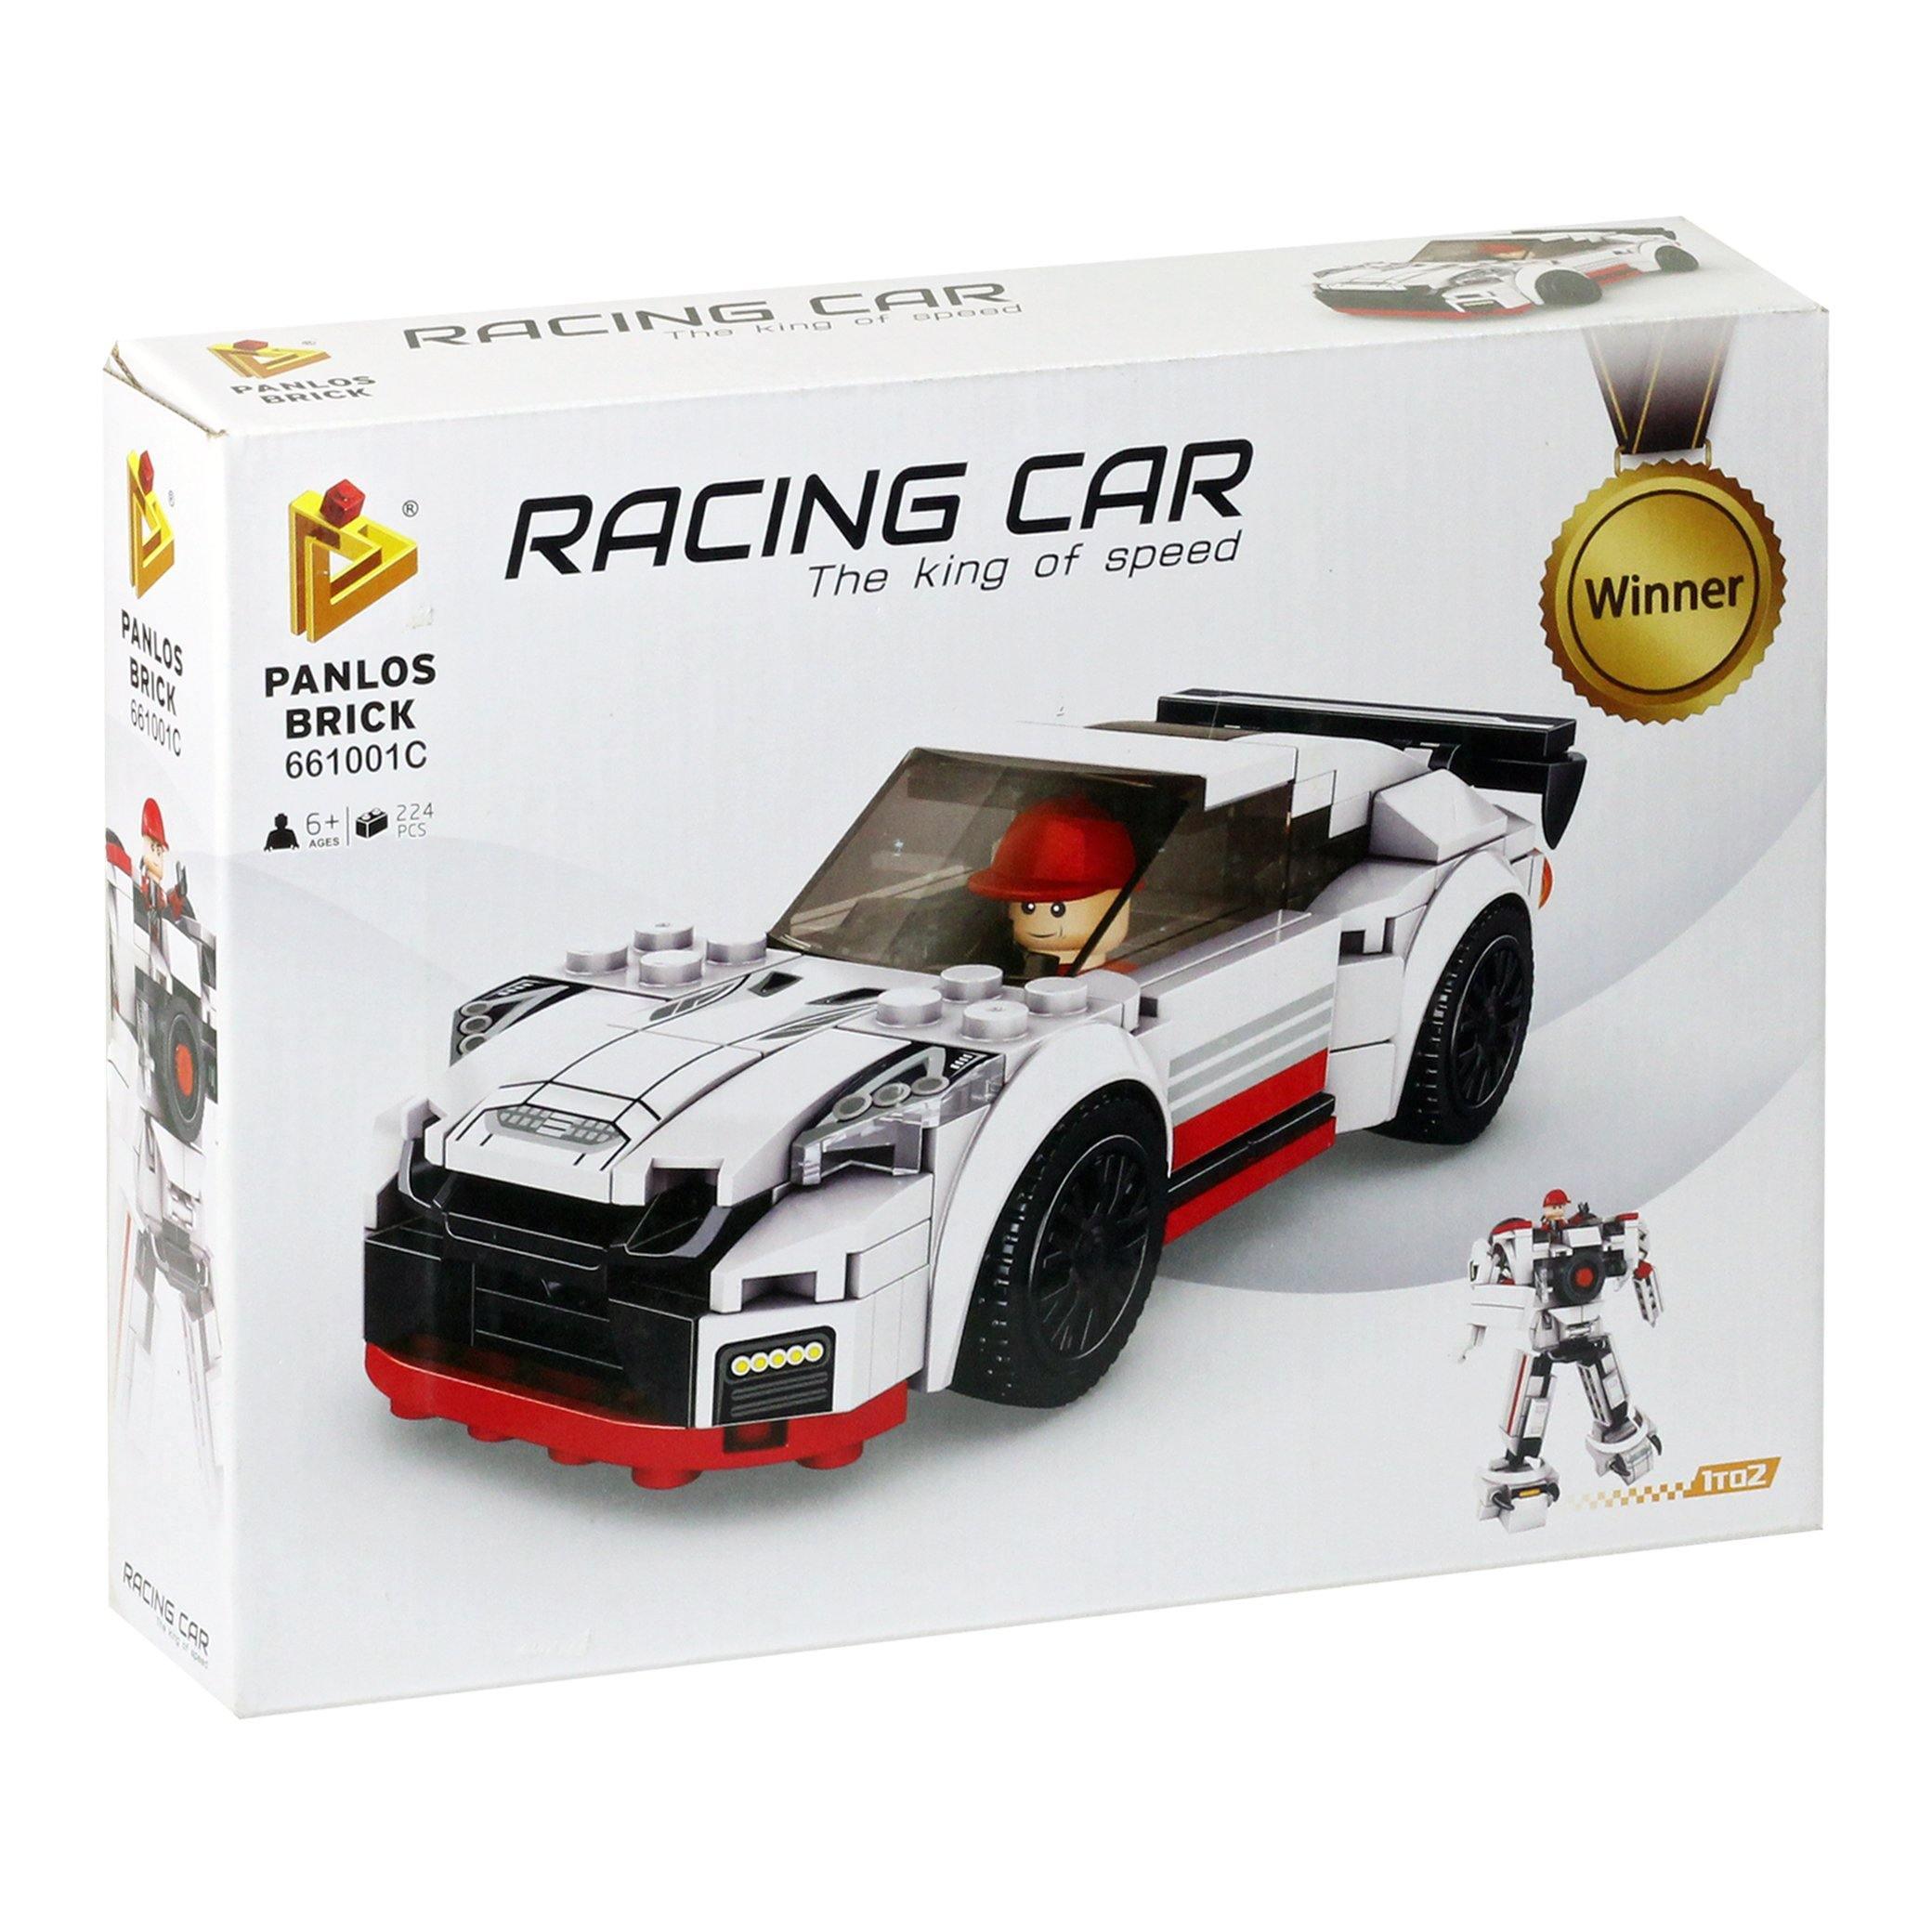 Panlos Brick Racing Car Building Blocks 224 Pieces - BumbleToys - 5-7 Years, Boys, LEGO, Toy Land